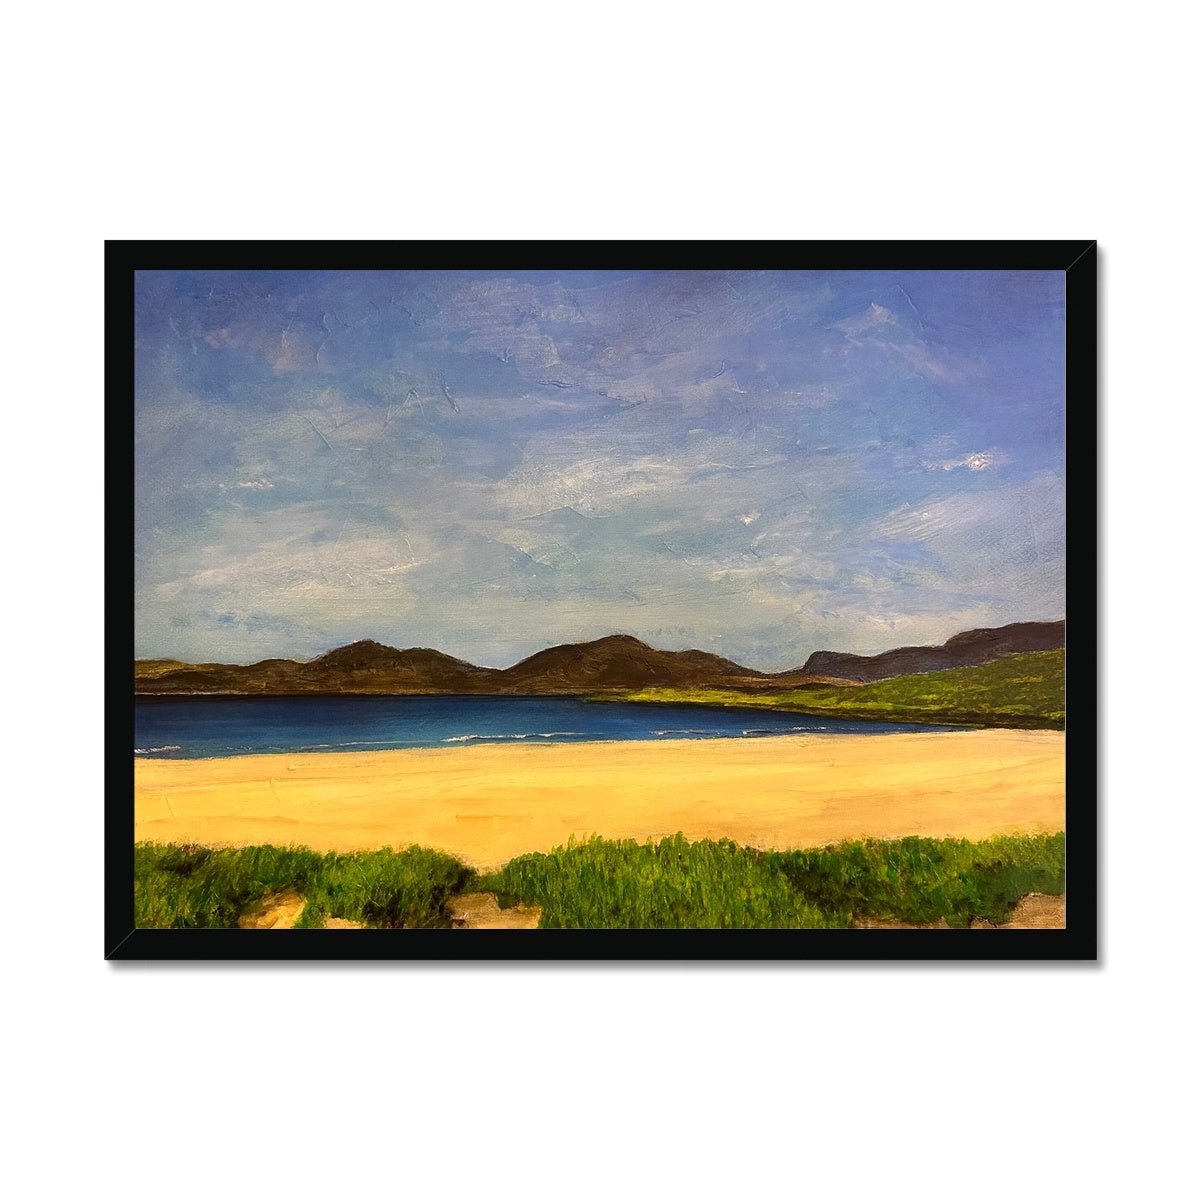 Luskentyre Beach Harris Painting | Framed Prints From Scotland-Framed Prints-Hebridean Islands Art Gallery-A2 Landscape-Black Frame-Paintings, Prints, Homeware, Art Gifts From Scotland By Scottish Artist Kevin Hunter